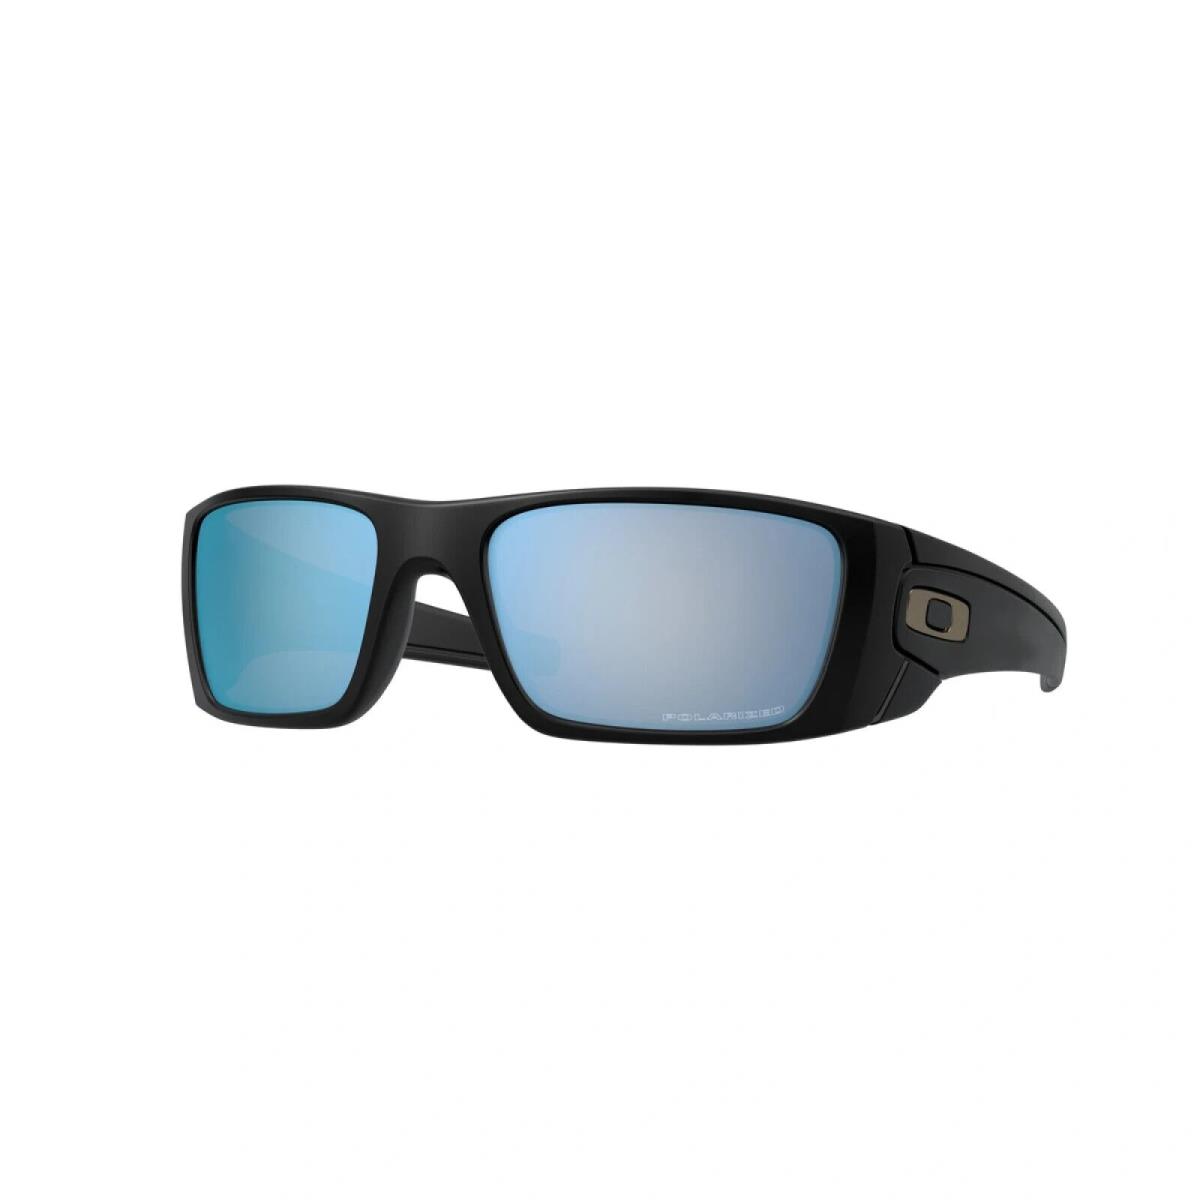 Oakley OO9096 Fuel Cell 9096D8 Matte Black-prizm Deep Water Polarized Sunglasses - MATTE BLACK Frame, PRIZM DEEP WATER POLARIZED Lens